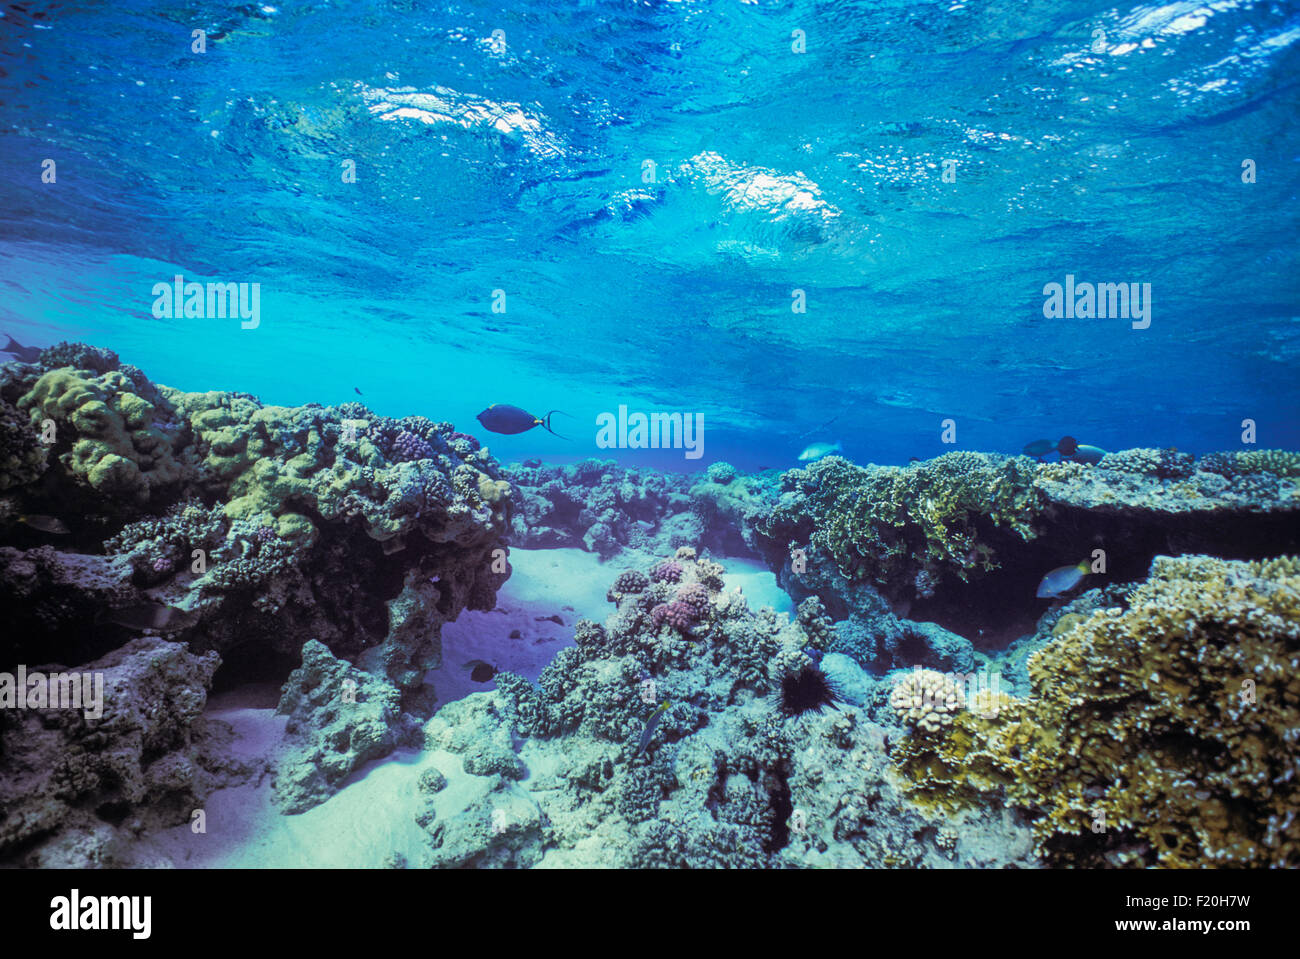 Orangespine Unicornfish (Naso lituratus) swims above coral reef table and sandy lagoon, Egypt - Red Sea. Stock Photo